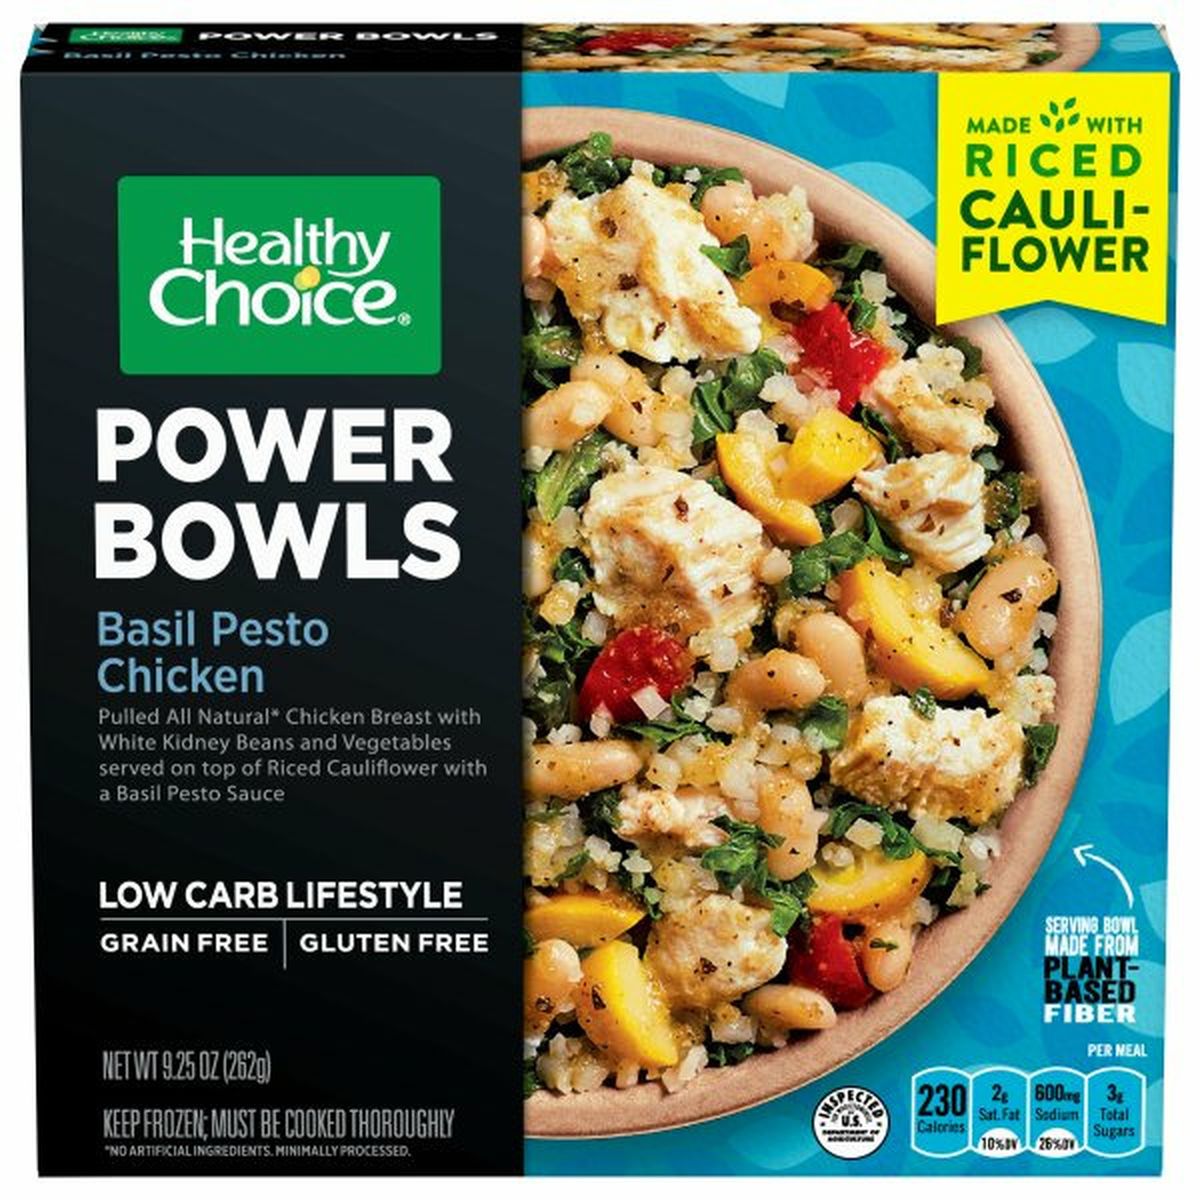 Calories in Healthy Choice Power Bowls, Basil Pesto Chicken